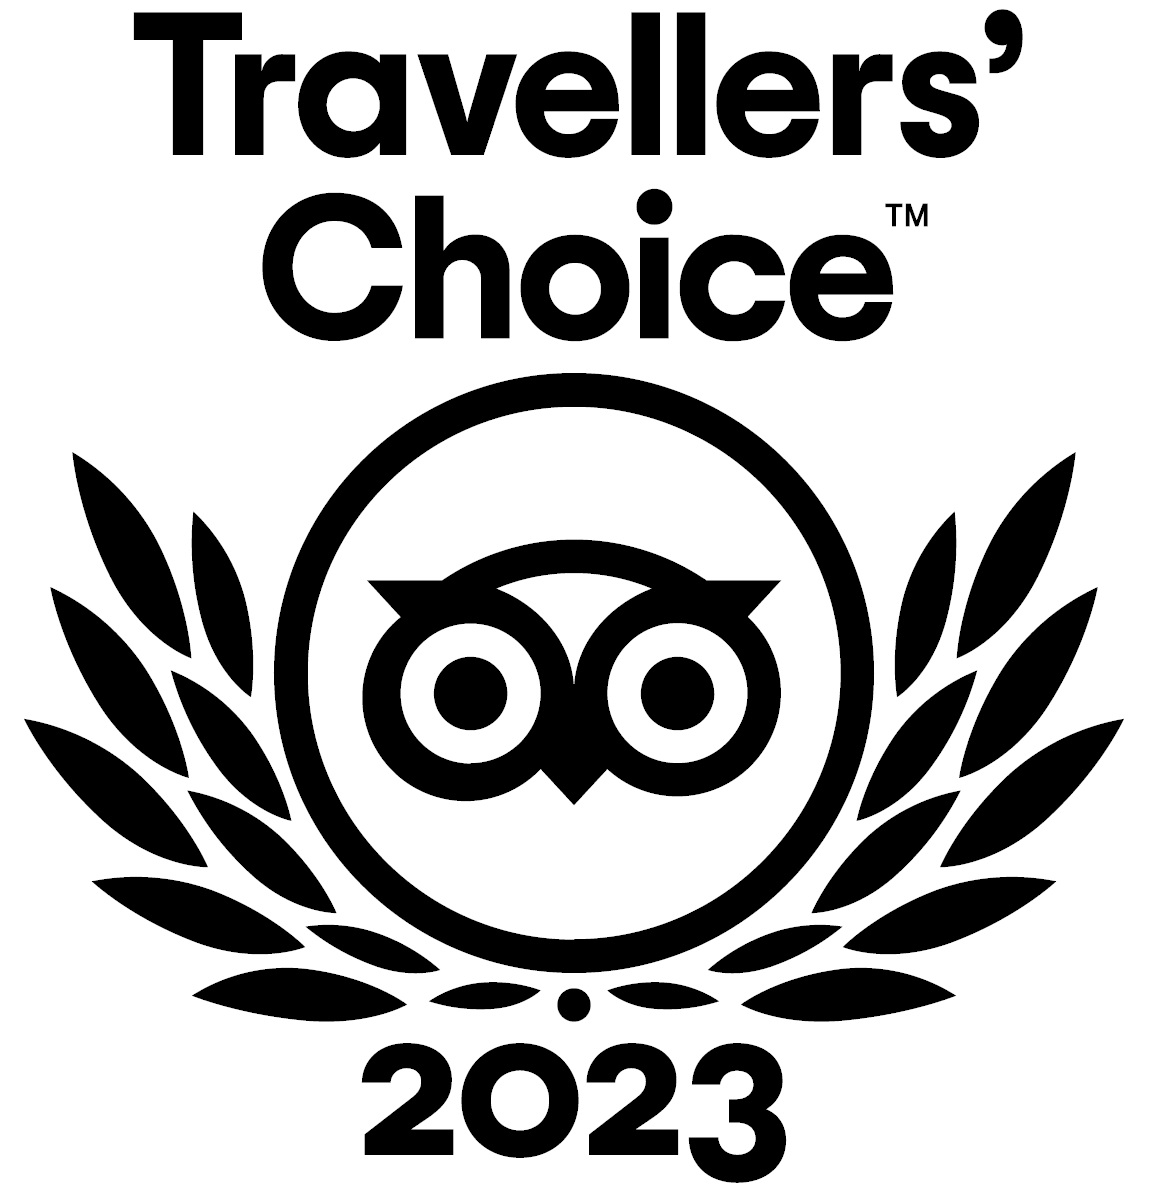 Tripadvisor Travellers Choice Award Holly Hagg